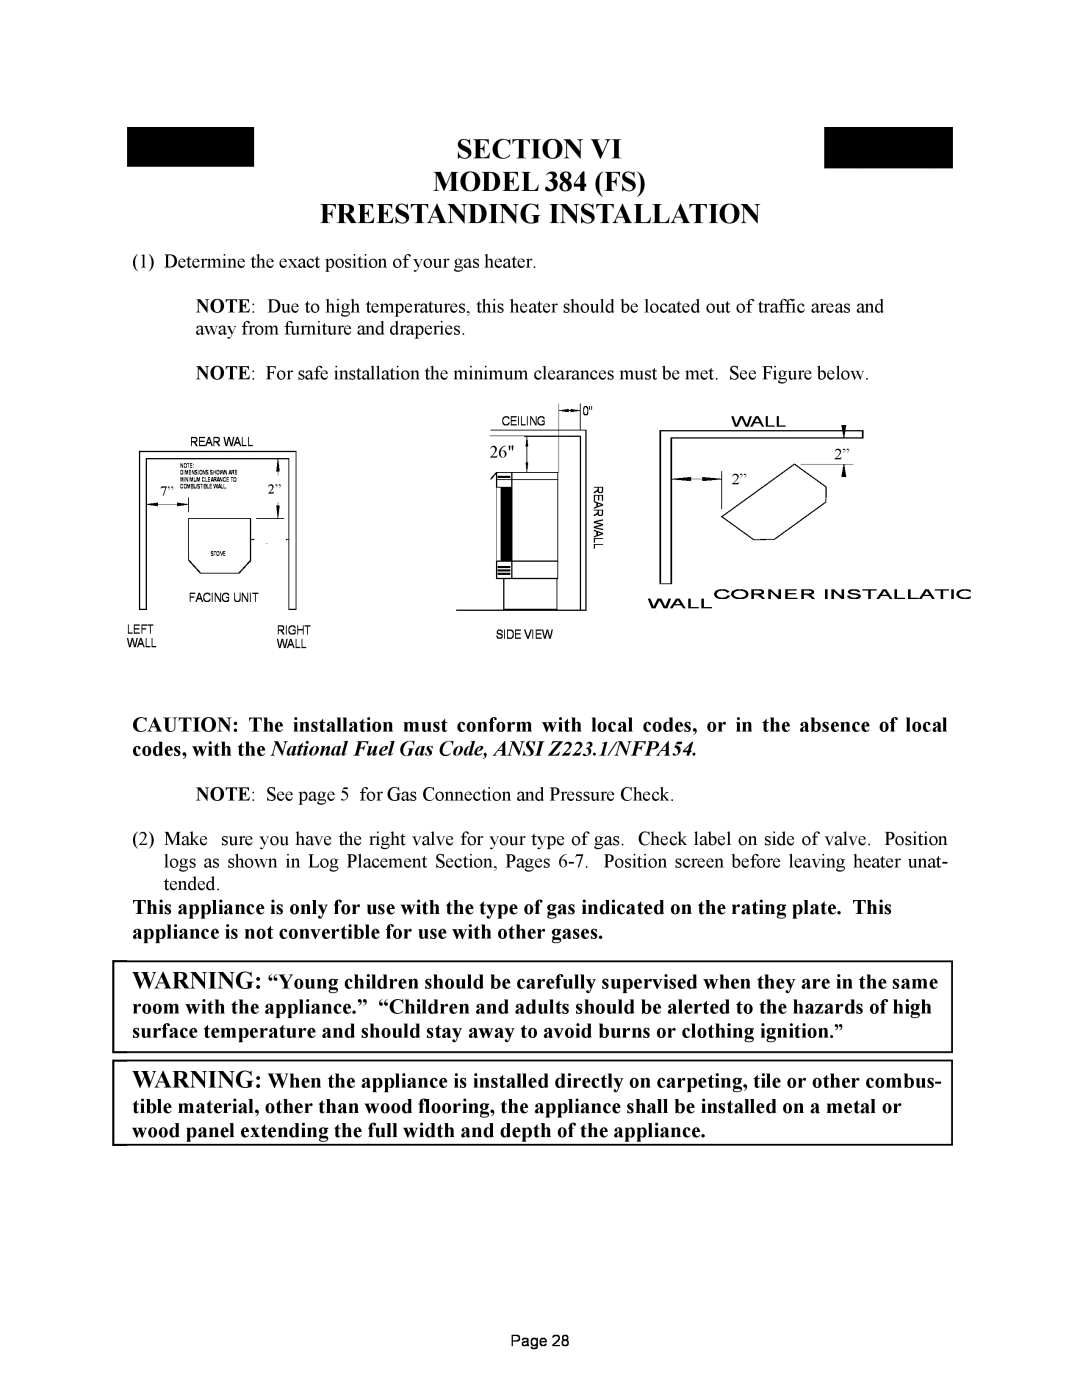 New Buck Corporation manual SECTION MODEL 384 FS FREESTANDING INSTALLATION 